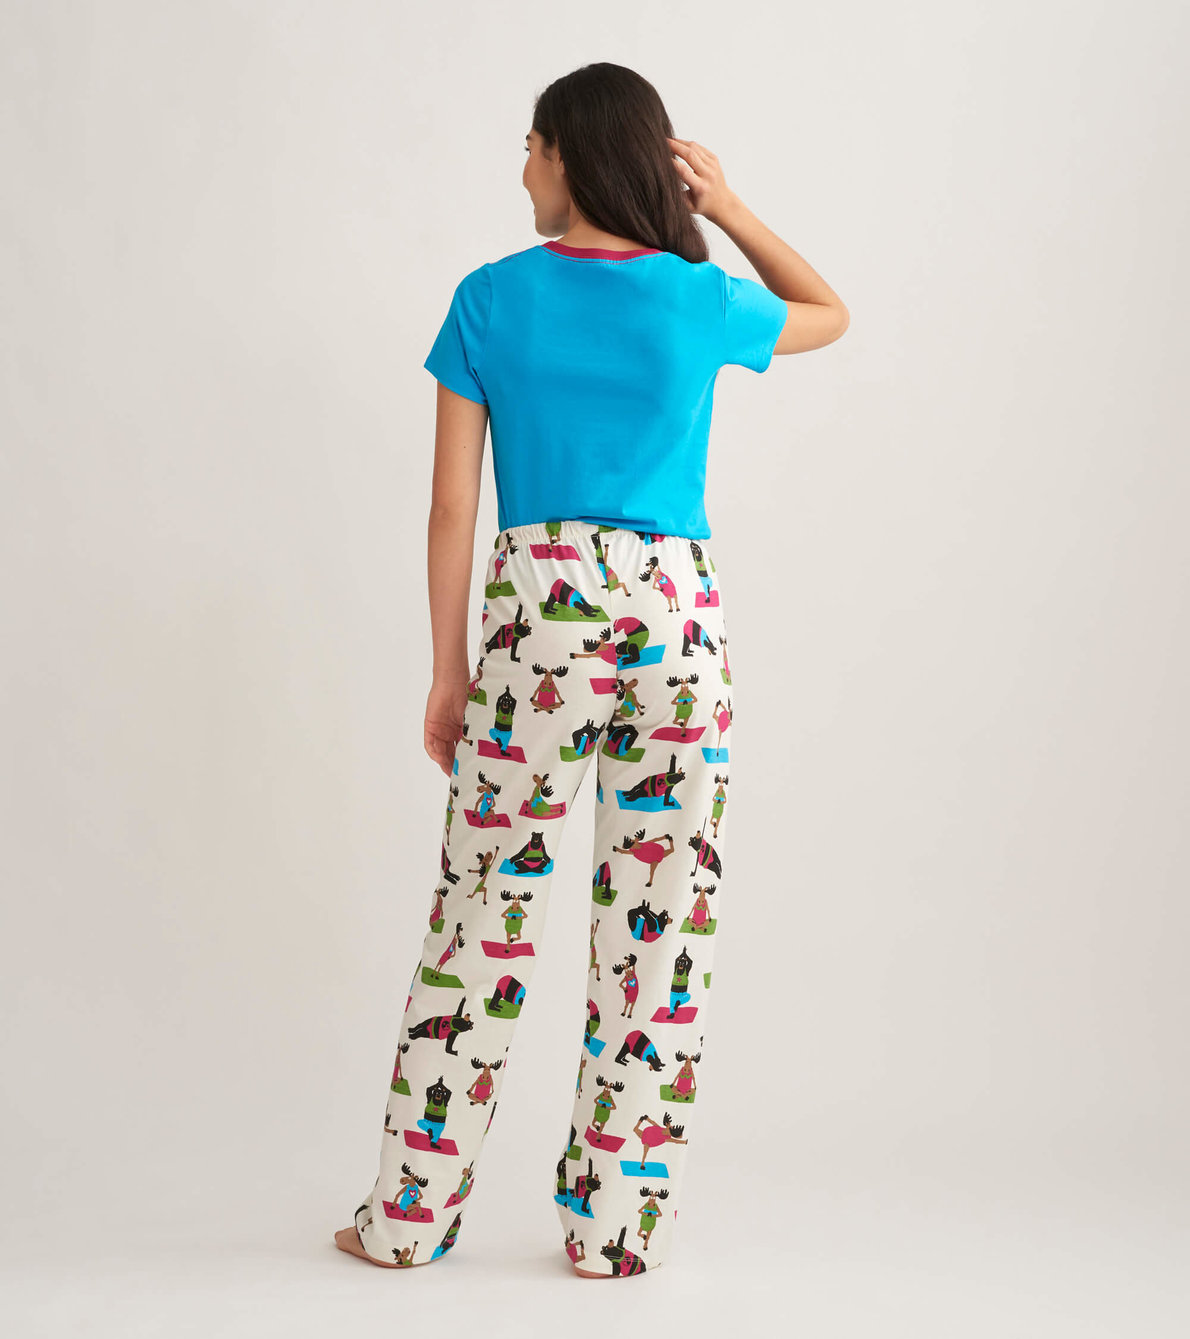 View larger image of Yoga Bear Women's Tee and Pants Pajama Separates